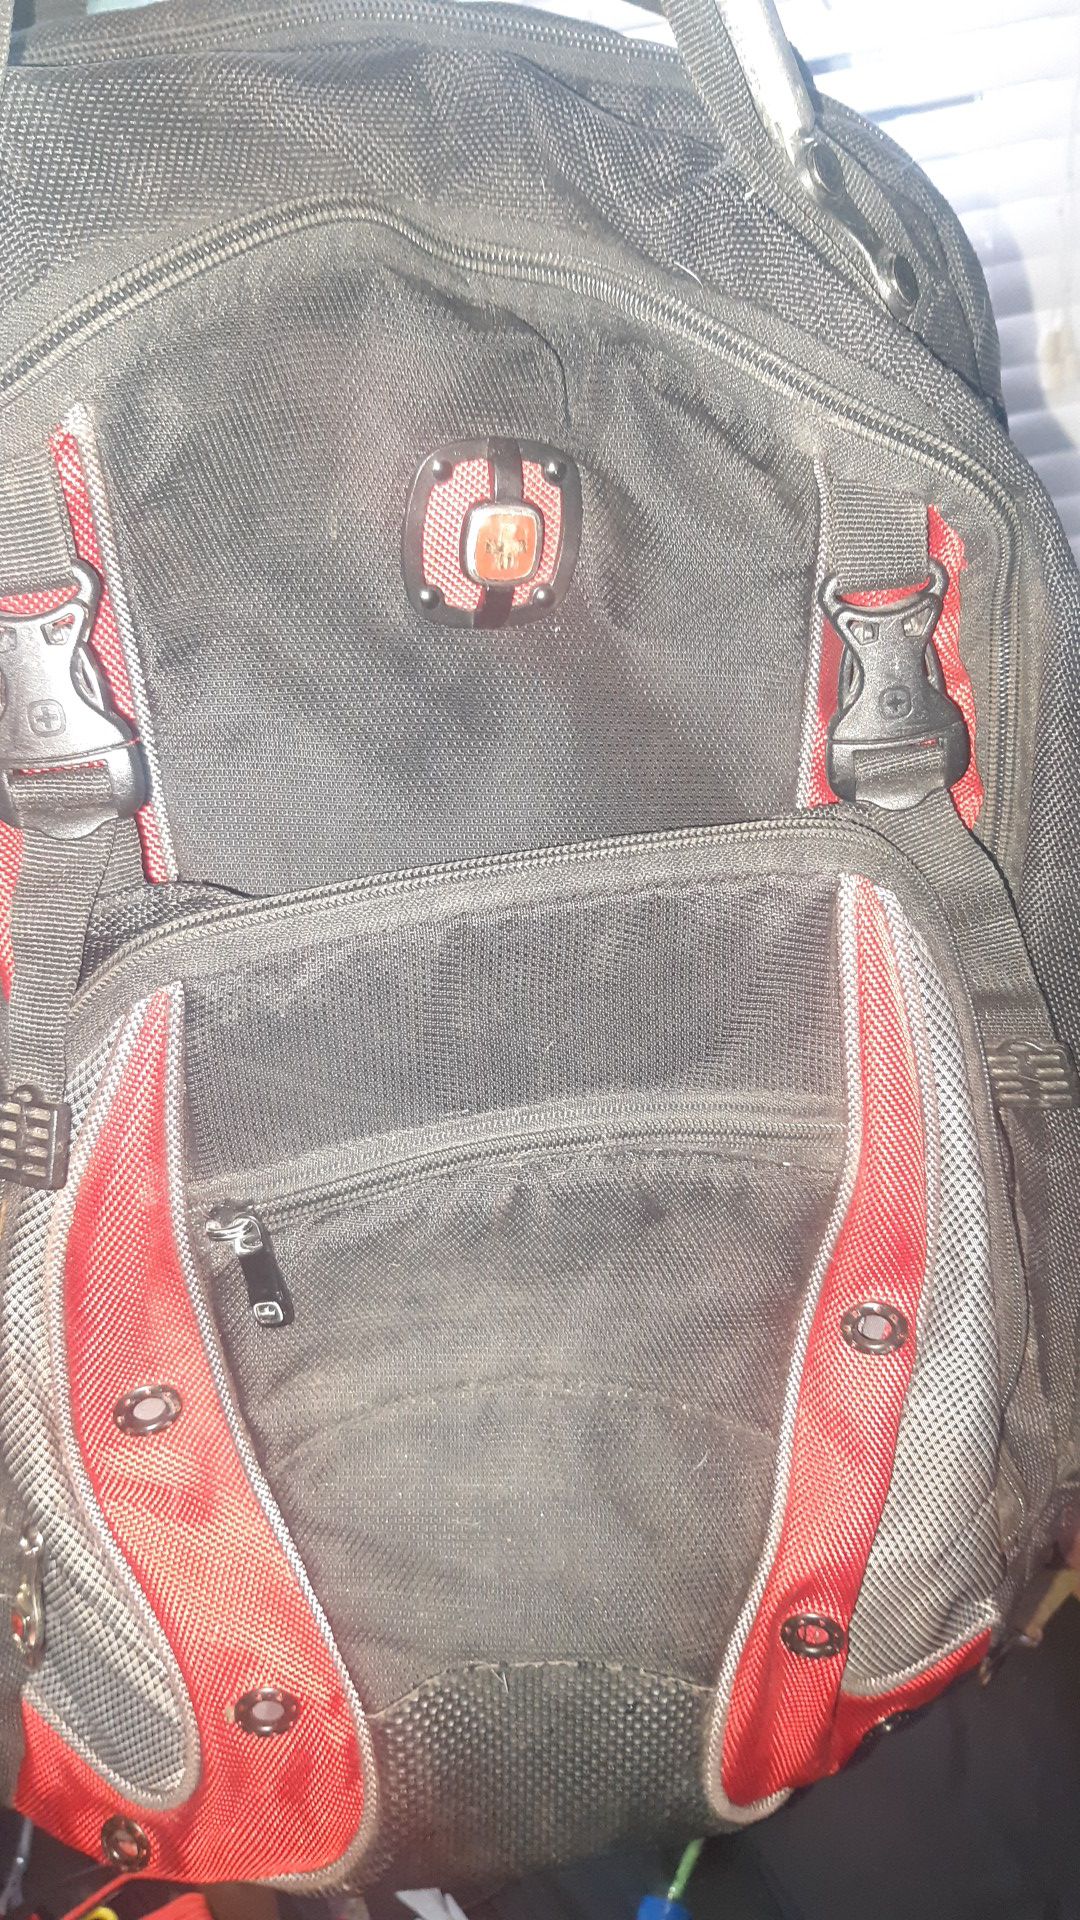 School backpack Swiss brand